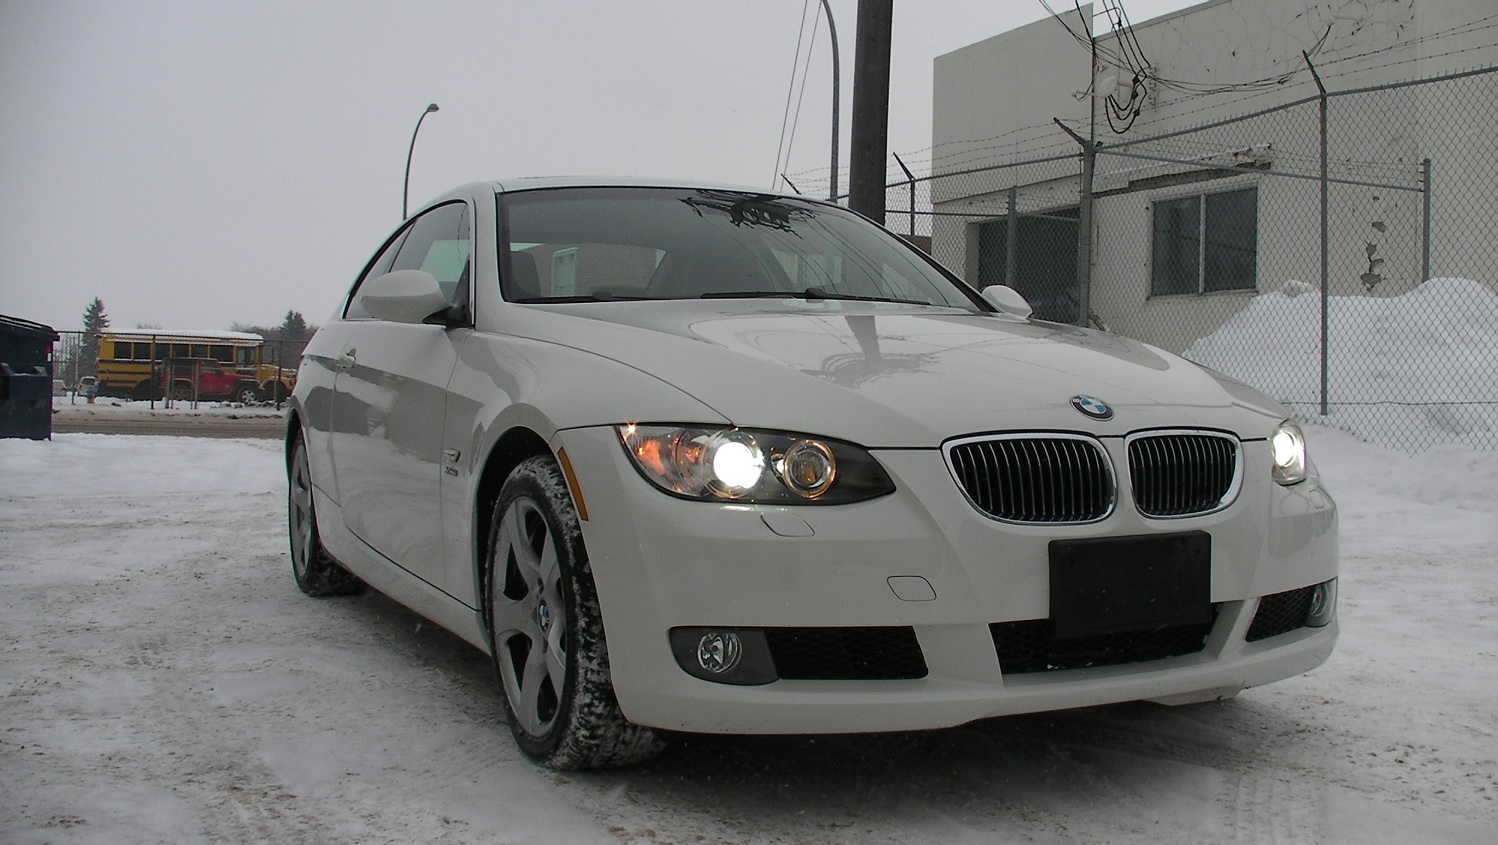  BMW 328xi in Edmonton, Alberta, $228